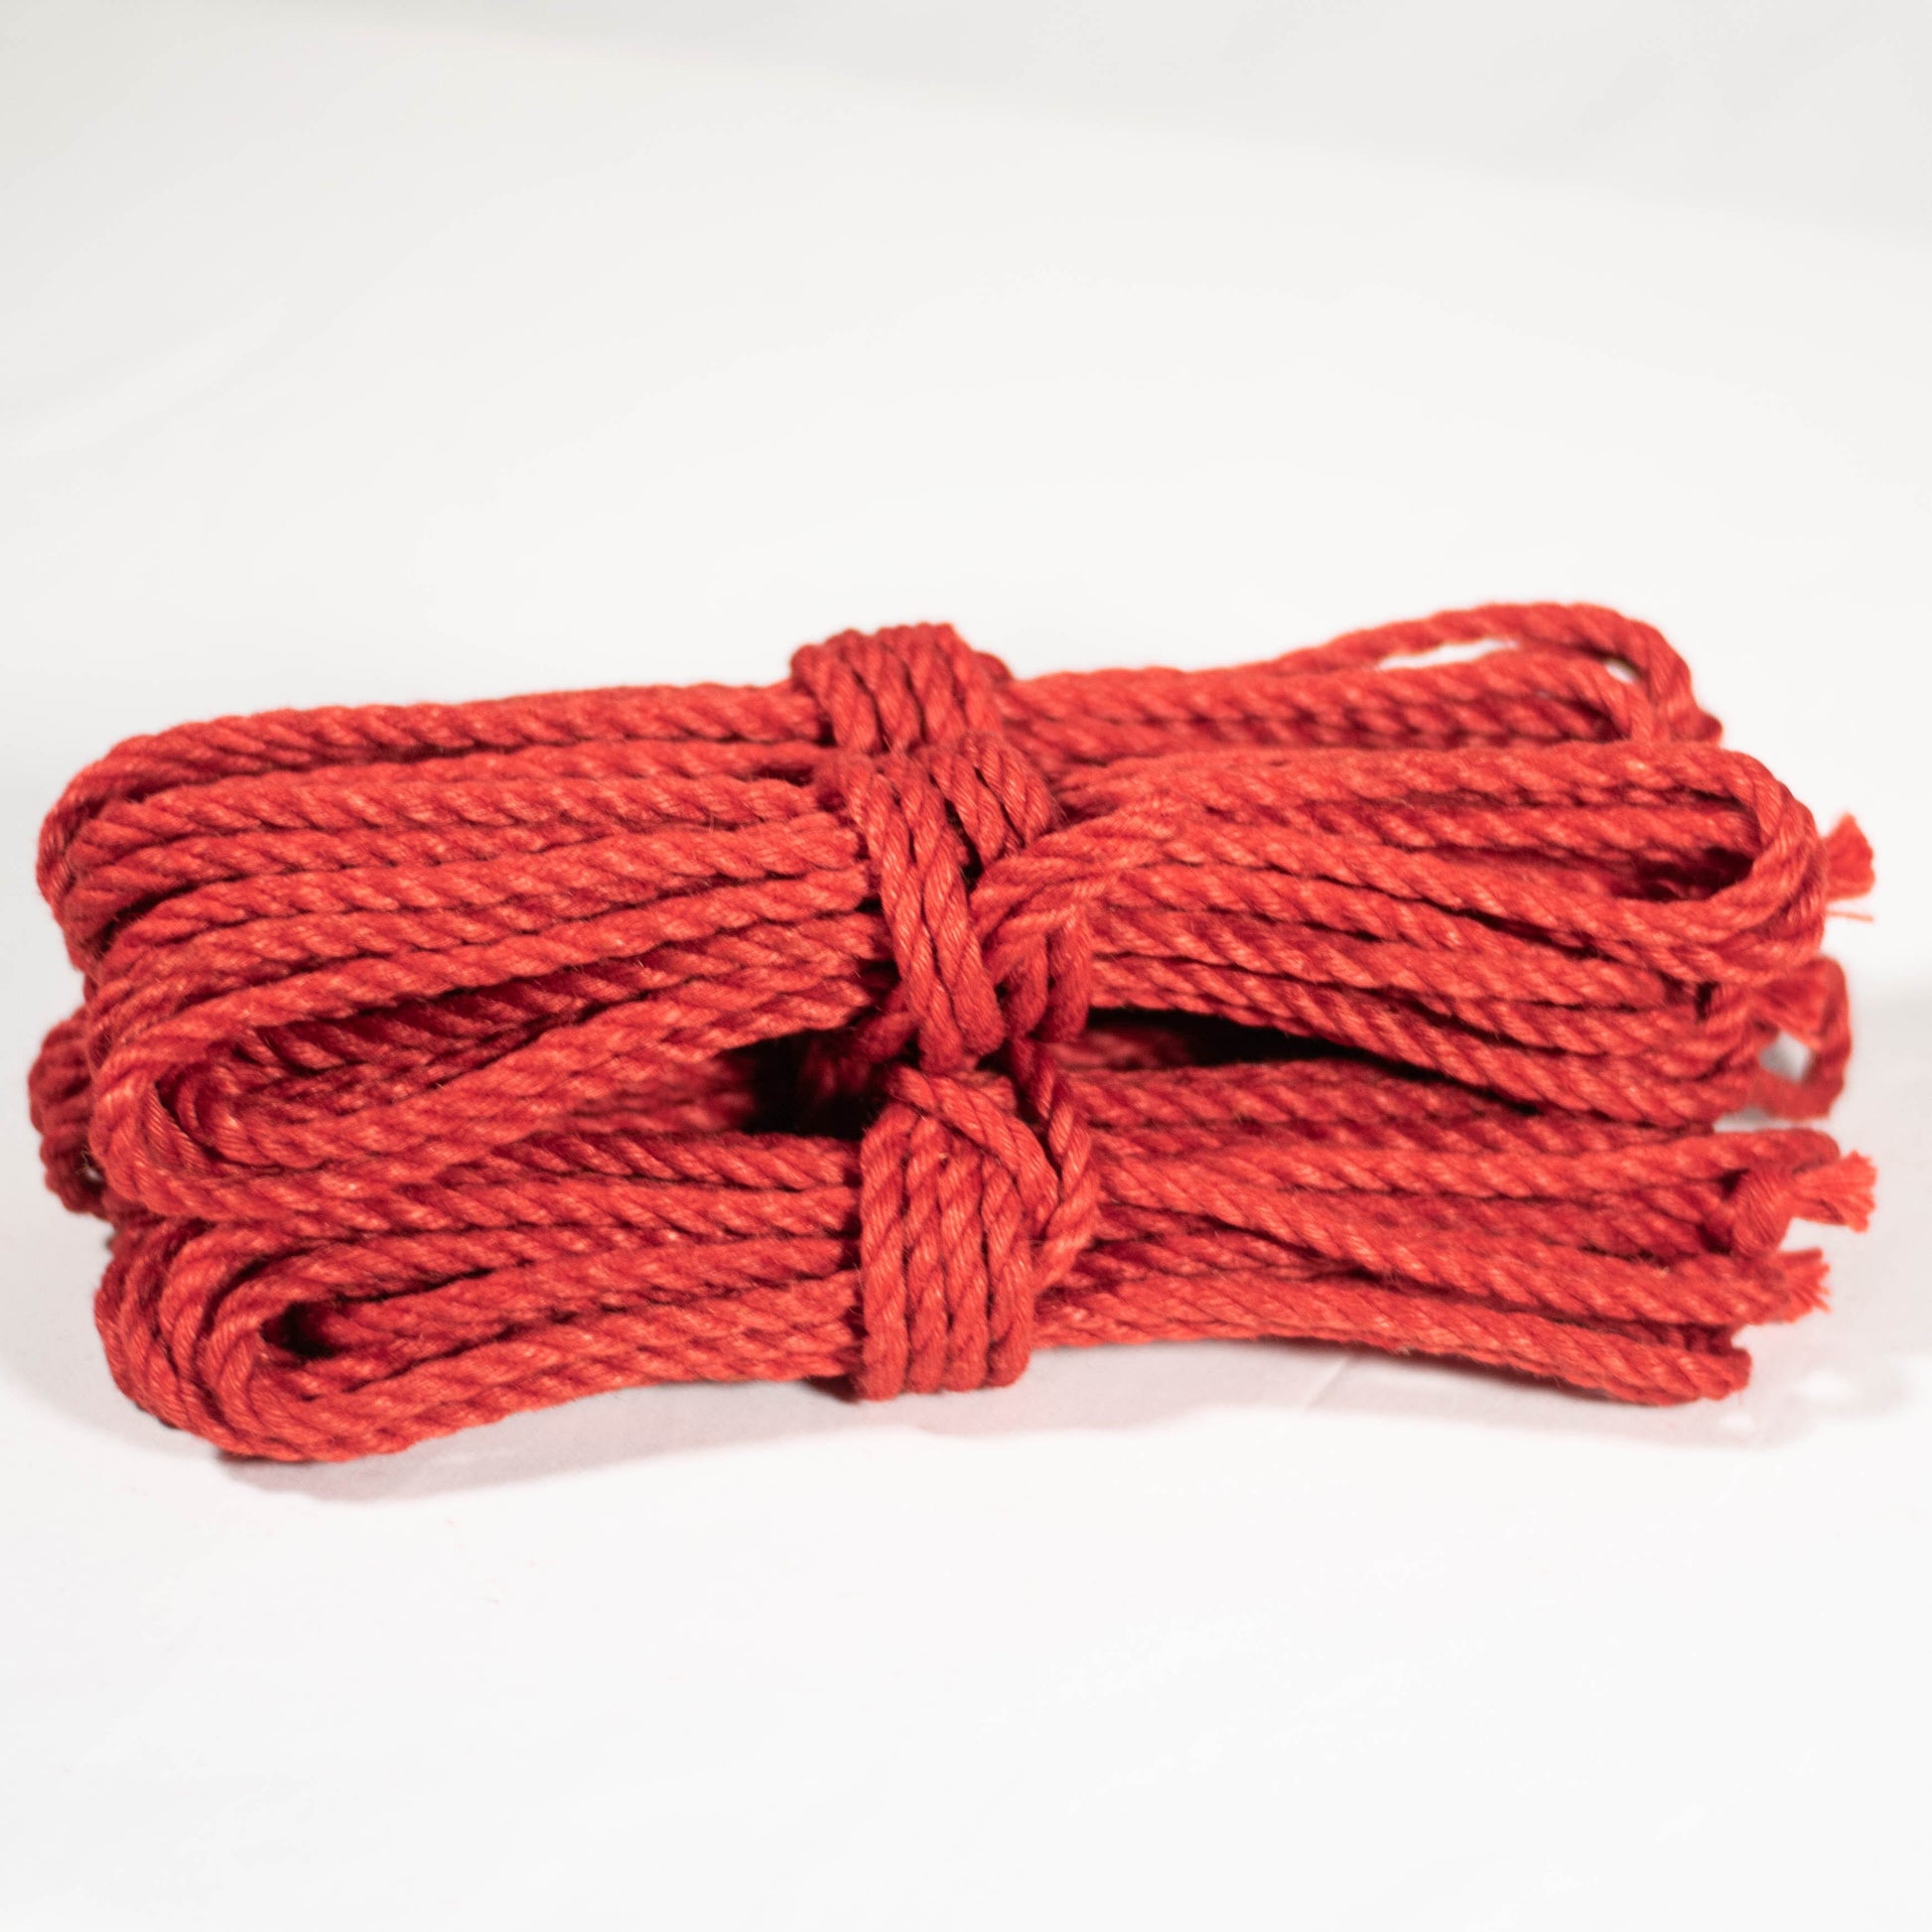 Treated Rope - 6mm Anatomie Red Jute Rope Shibari Rope Bundle of 4 